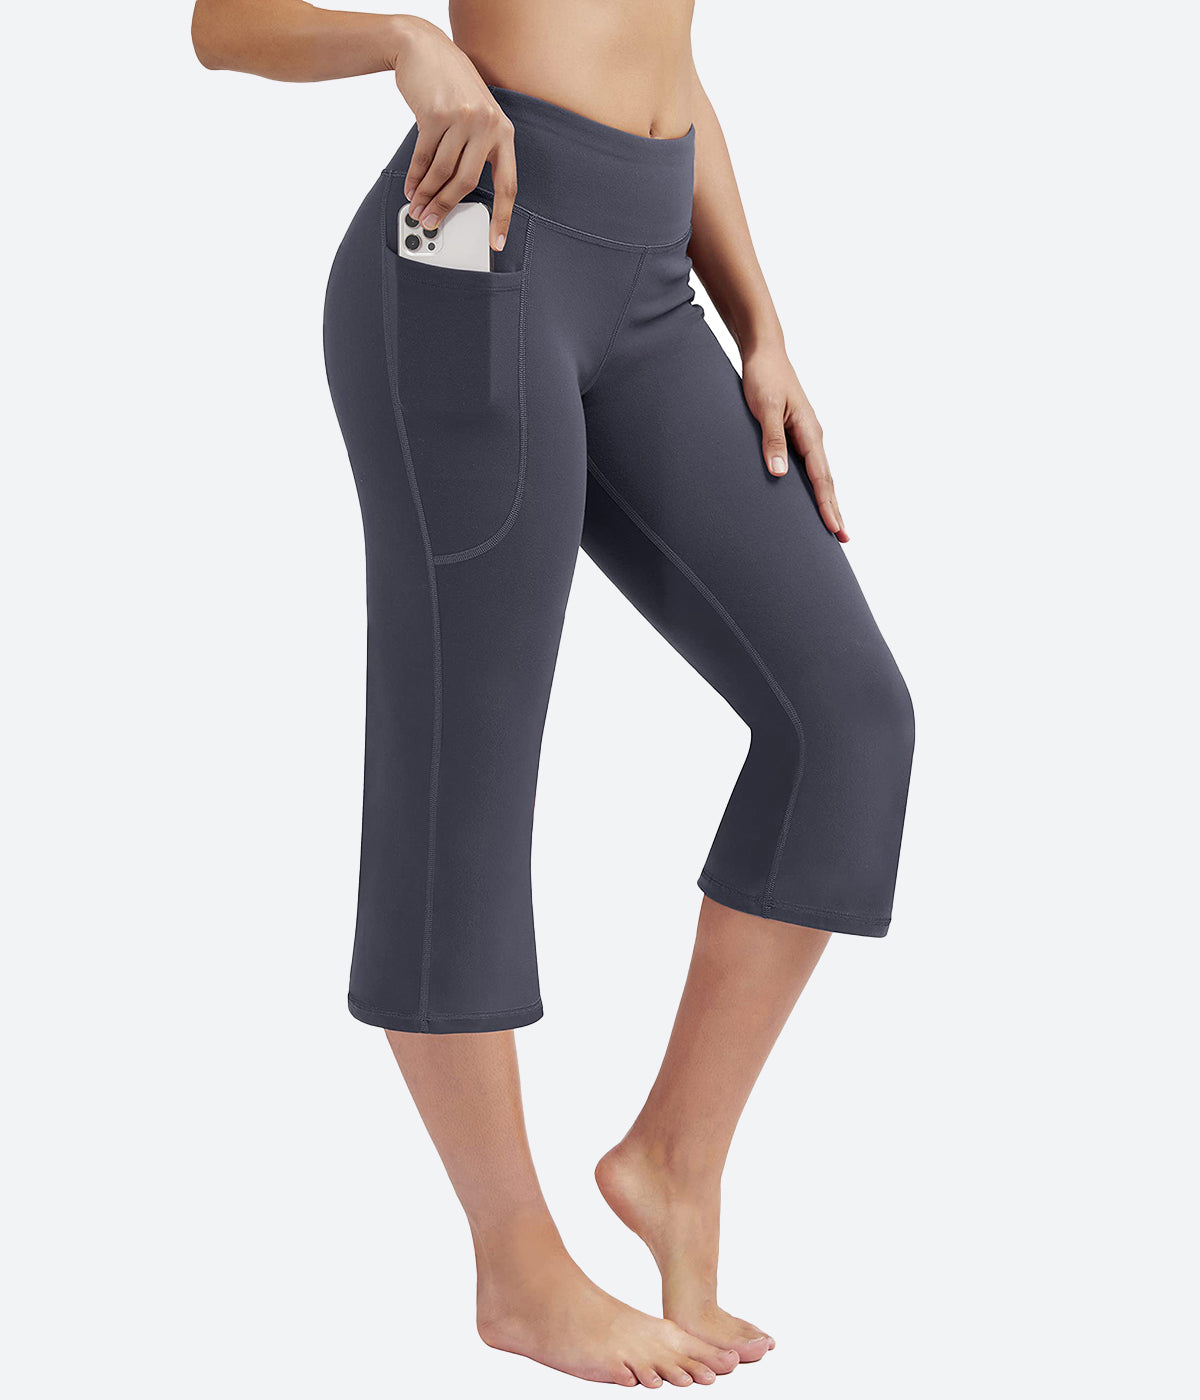 High Waist X-Line Yoga Pants with Pockets - HY21